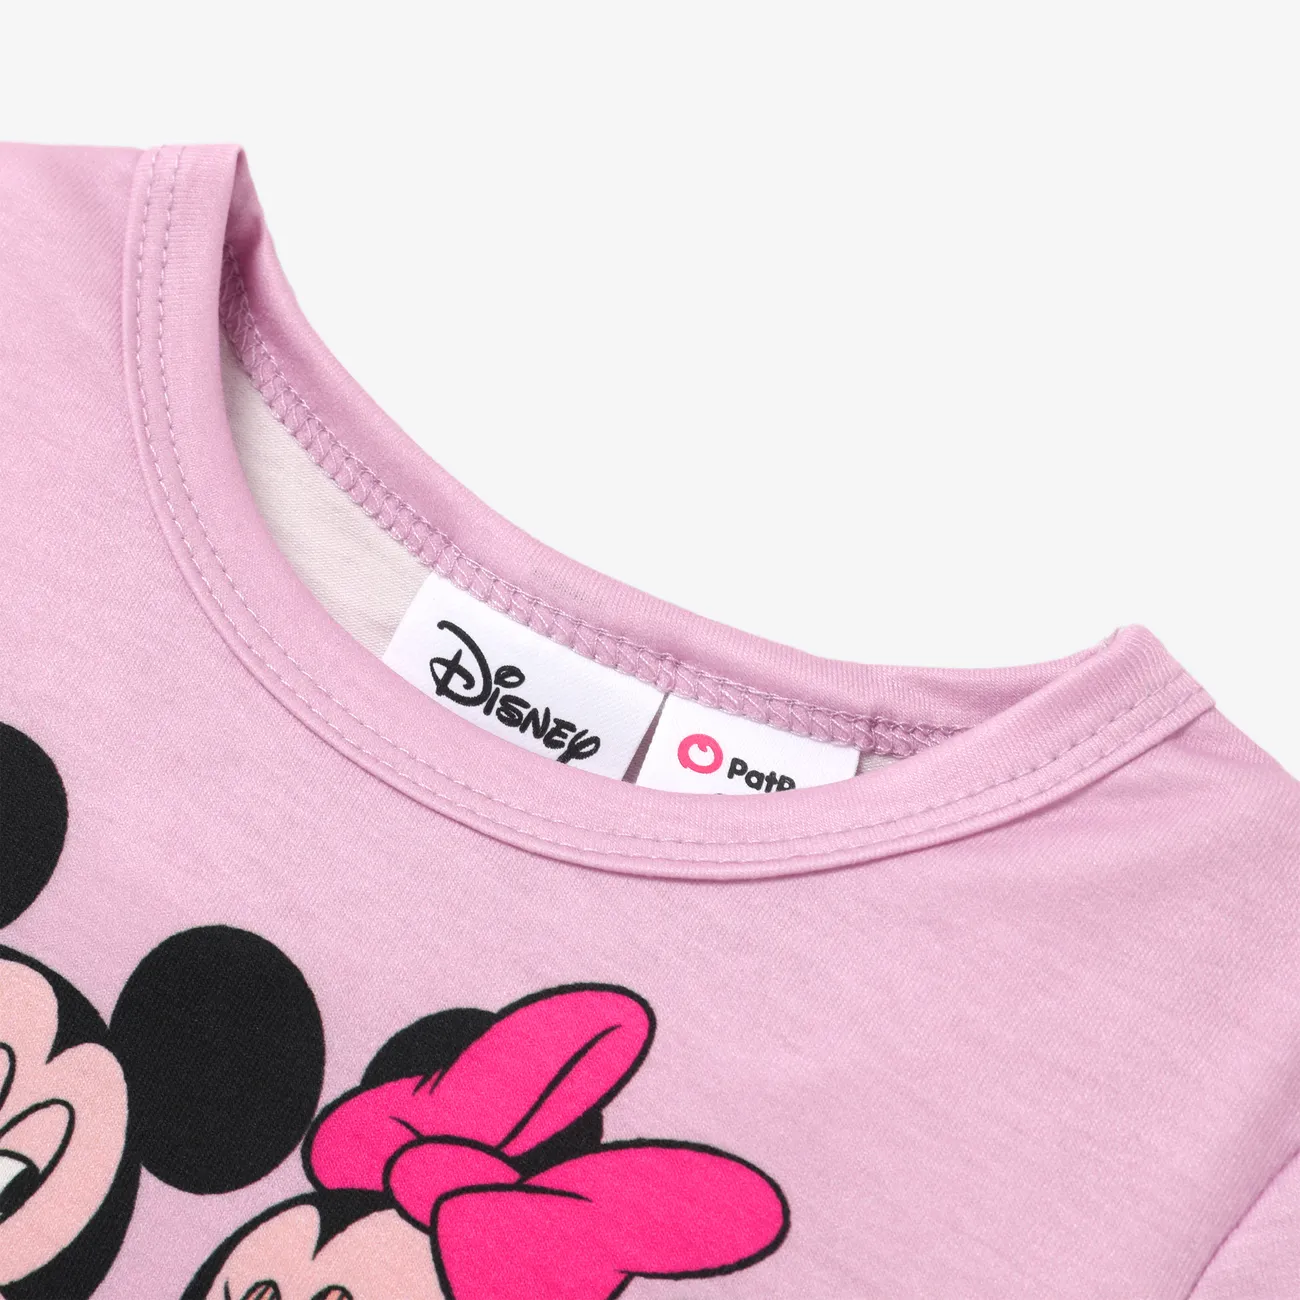 Disney Mickey and Friends Toddler Girls Mother's Day 2pcs Naia™ Character Print Tee and Pants Set Pink big image 1